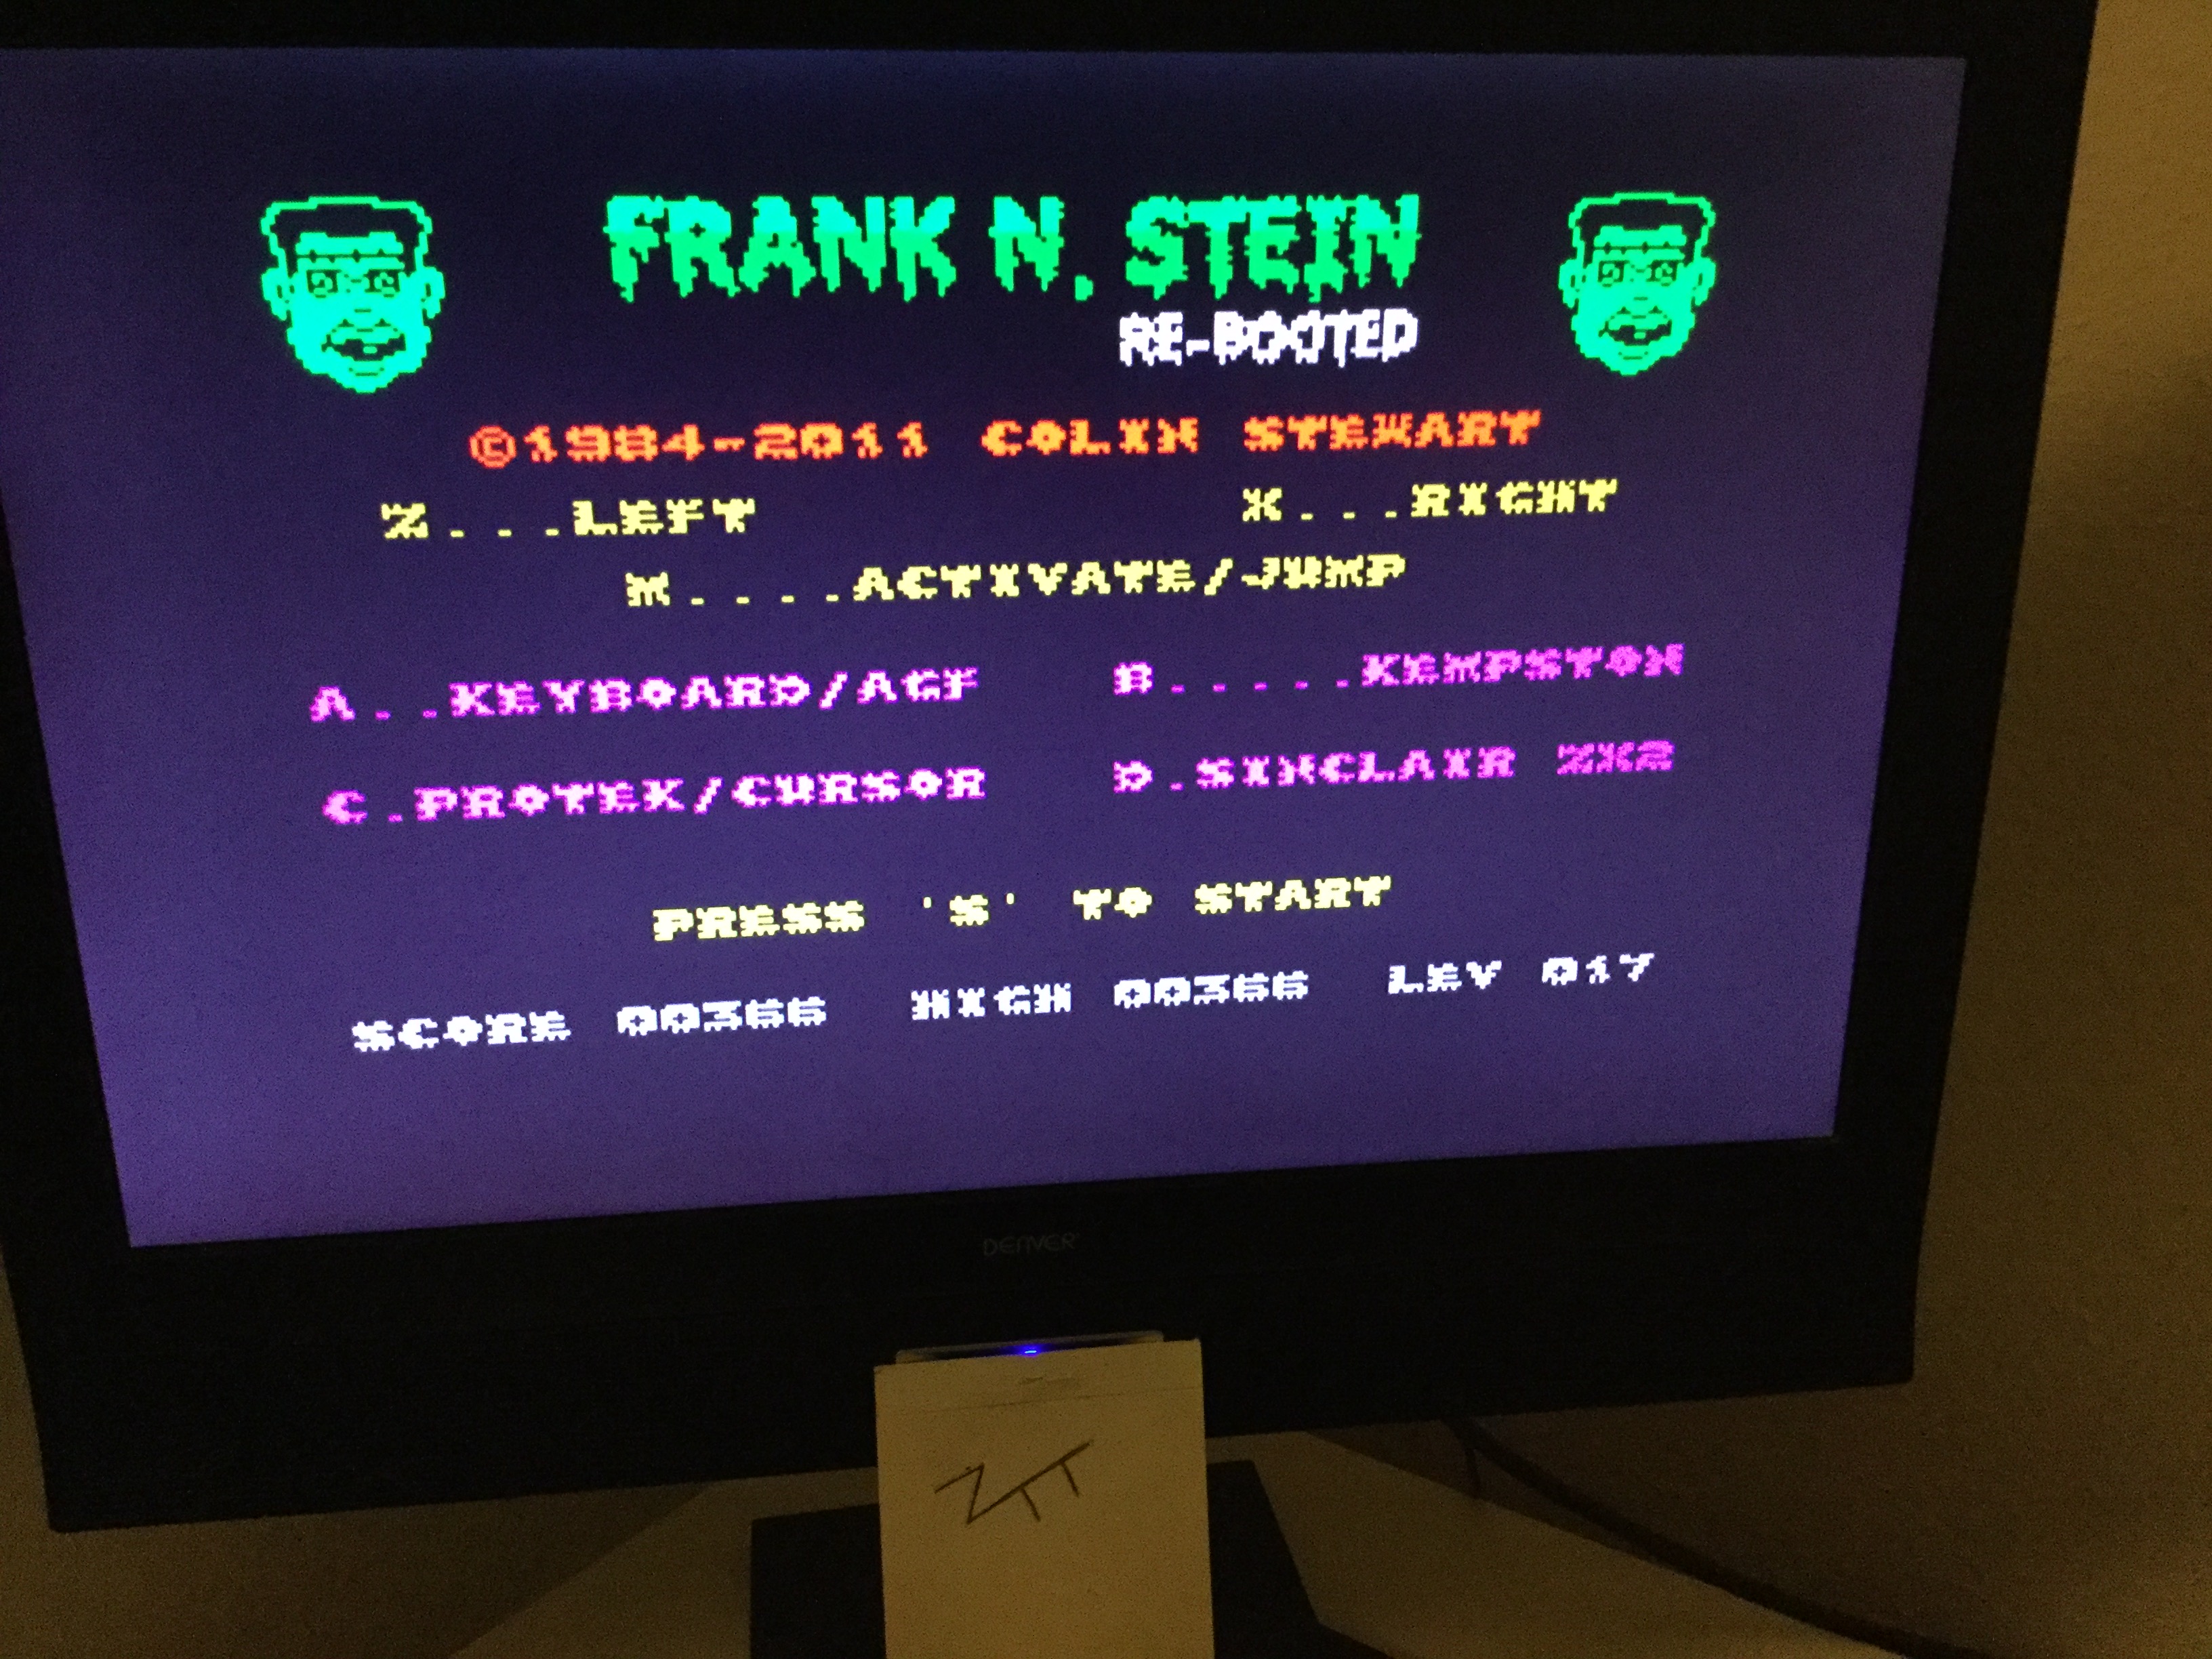 Frankie: Frank N Stein Re-booted (ZX Spectrum) 366 points on 2019-11-17 16:21:23